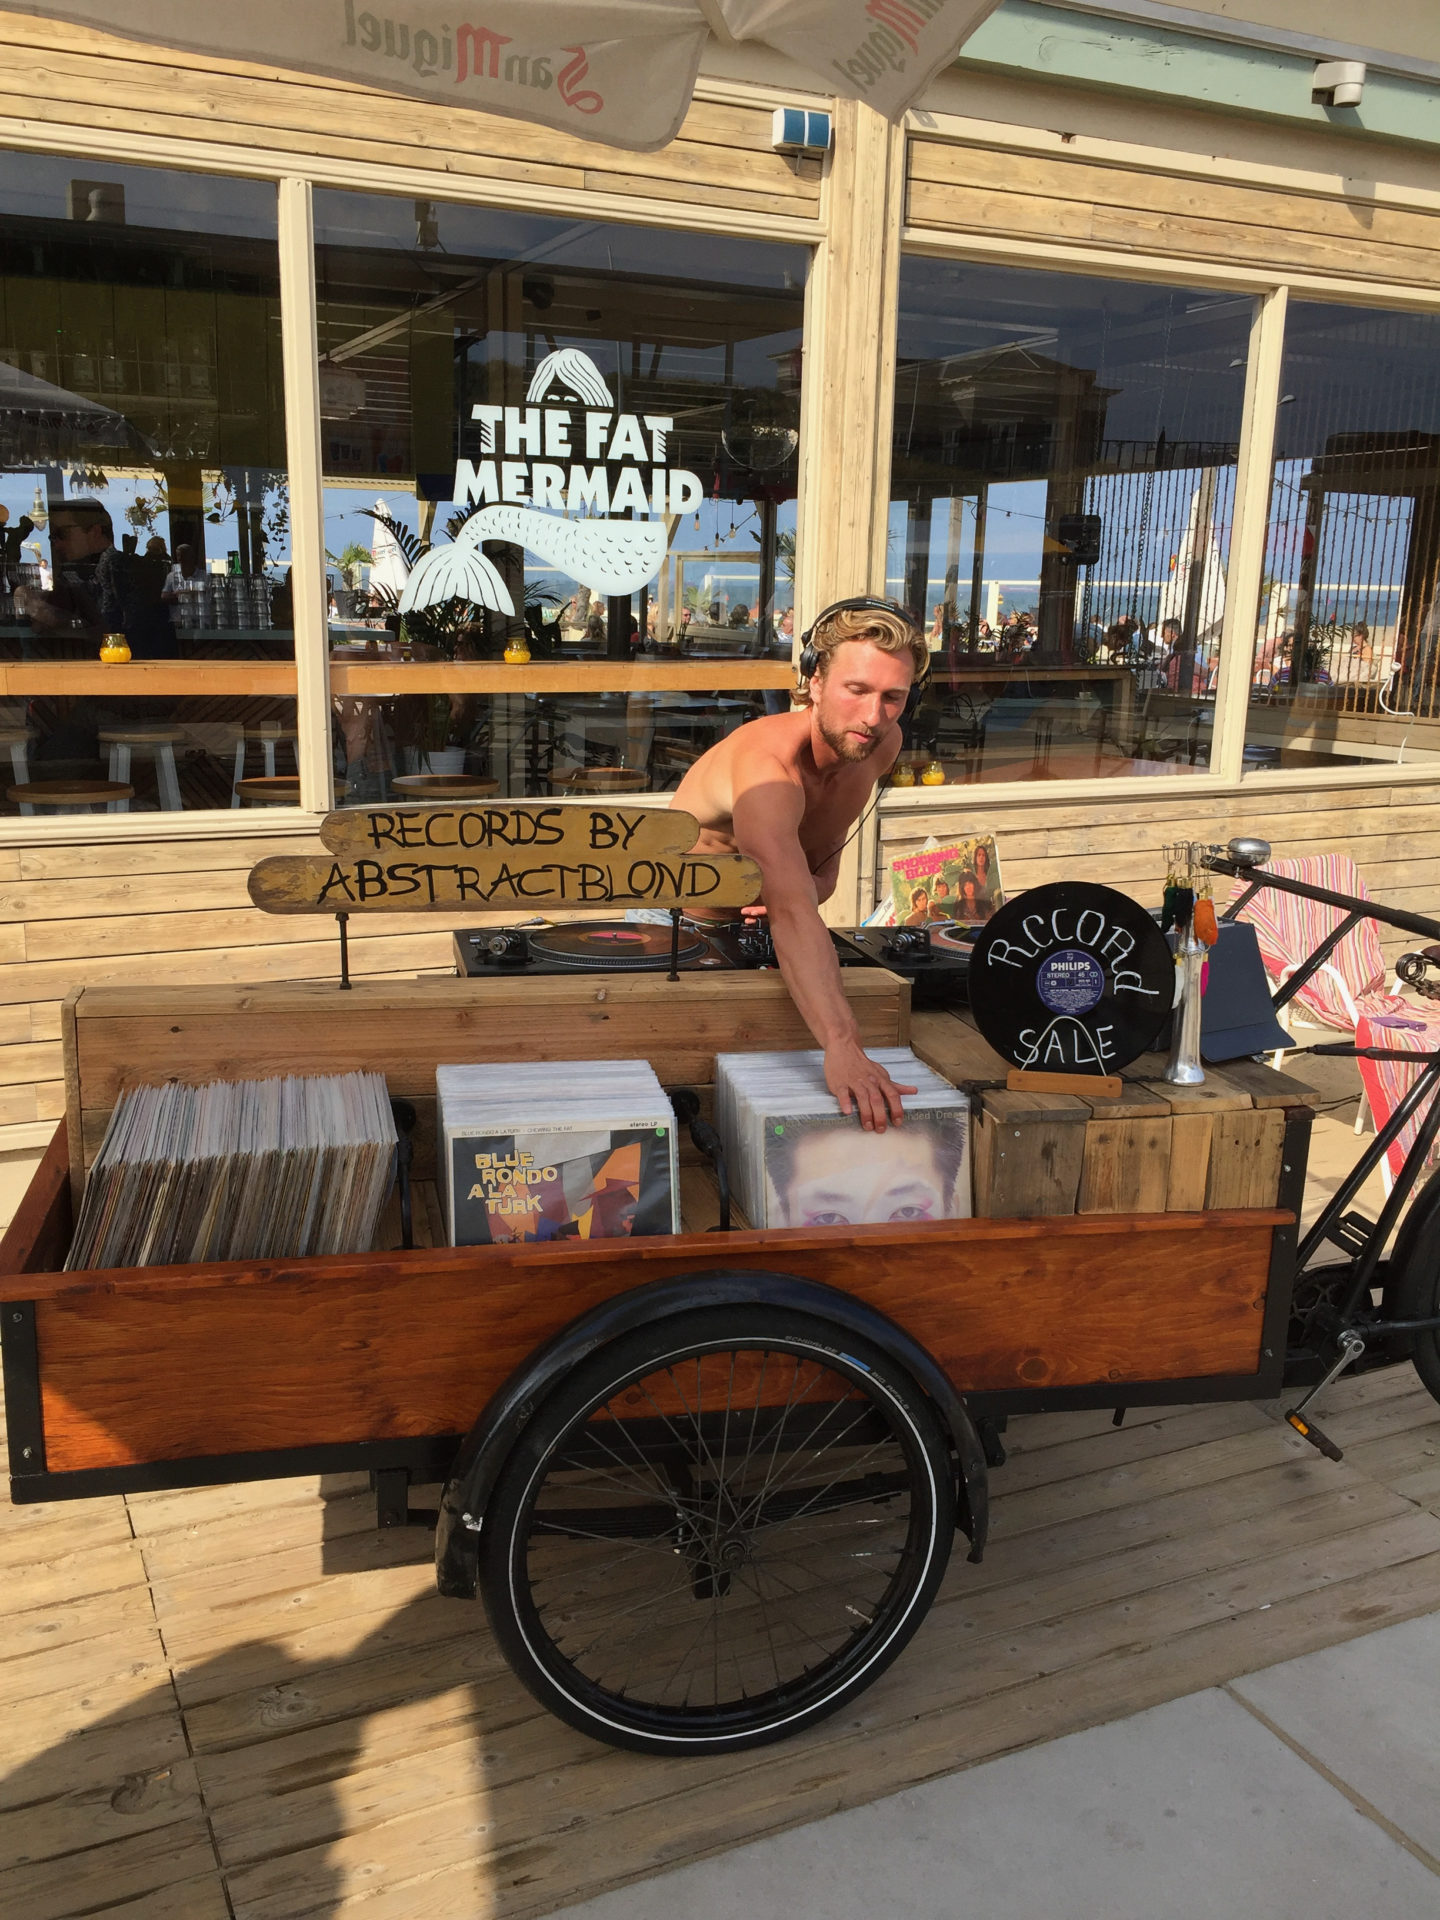 Schallplattenverkäufer vor einem Strandpavillon The Fat Mermaid in Den Haag